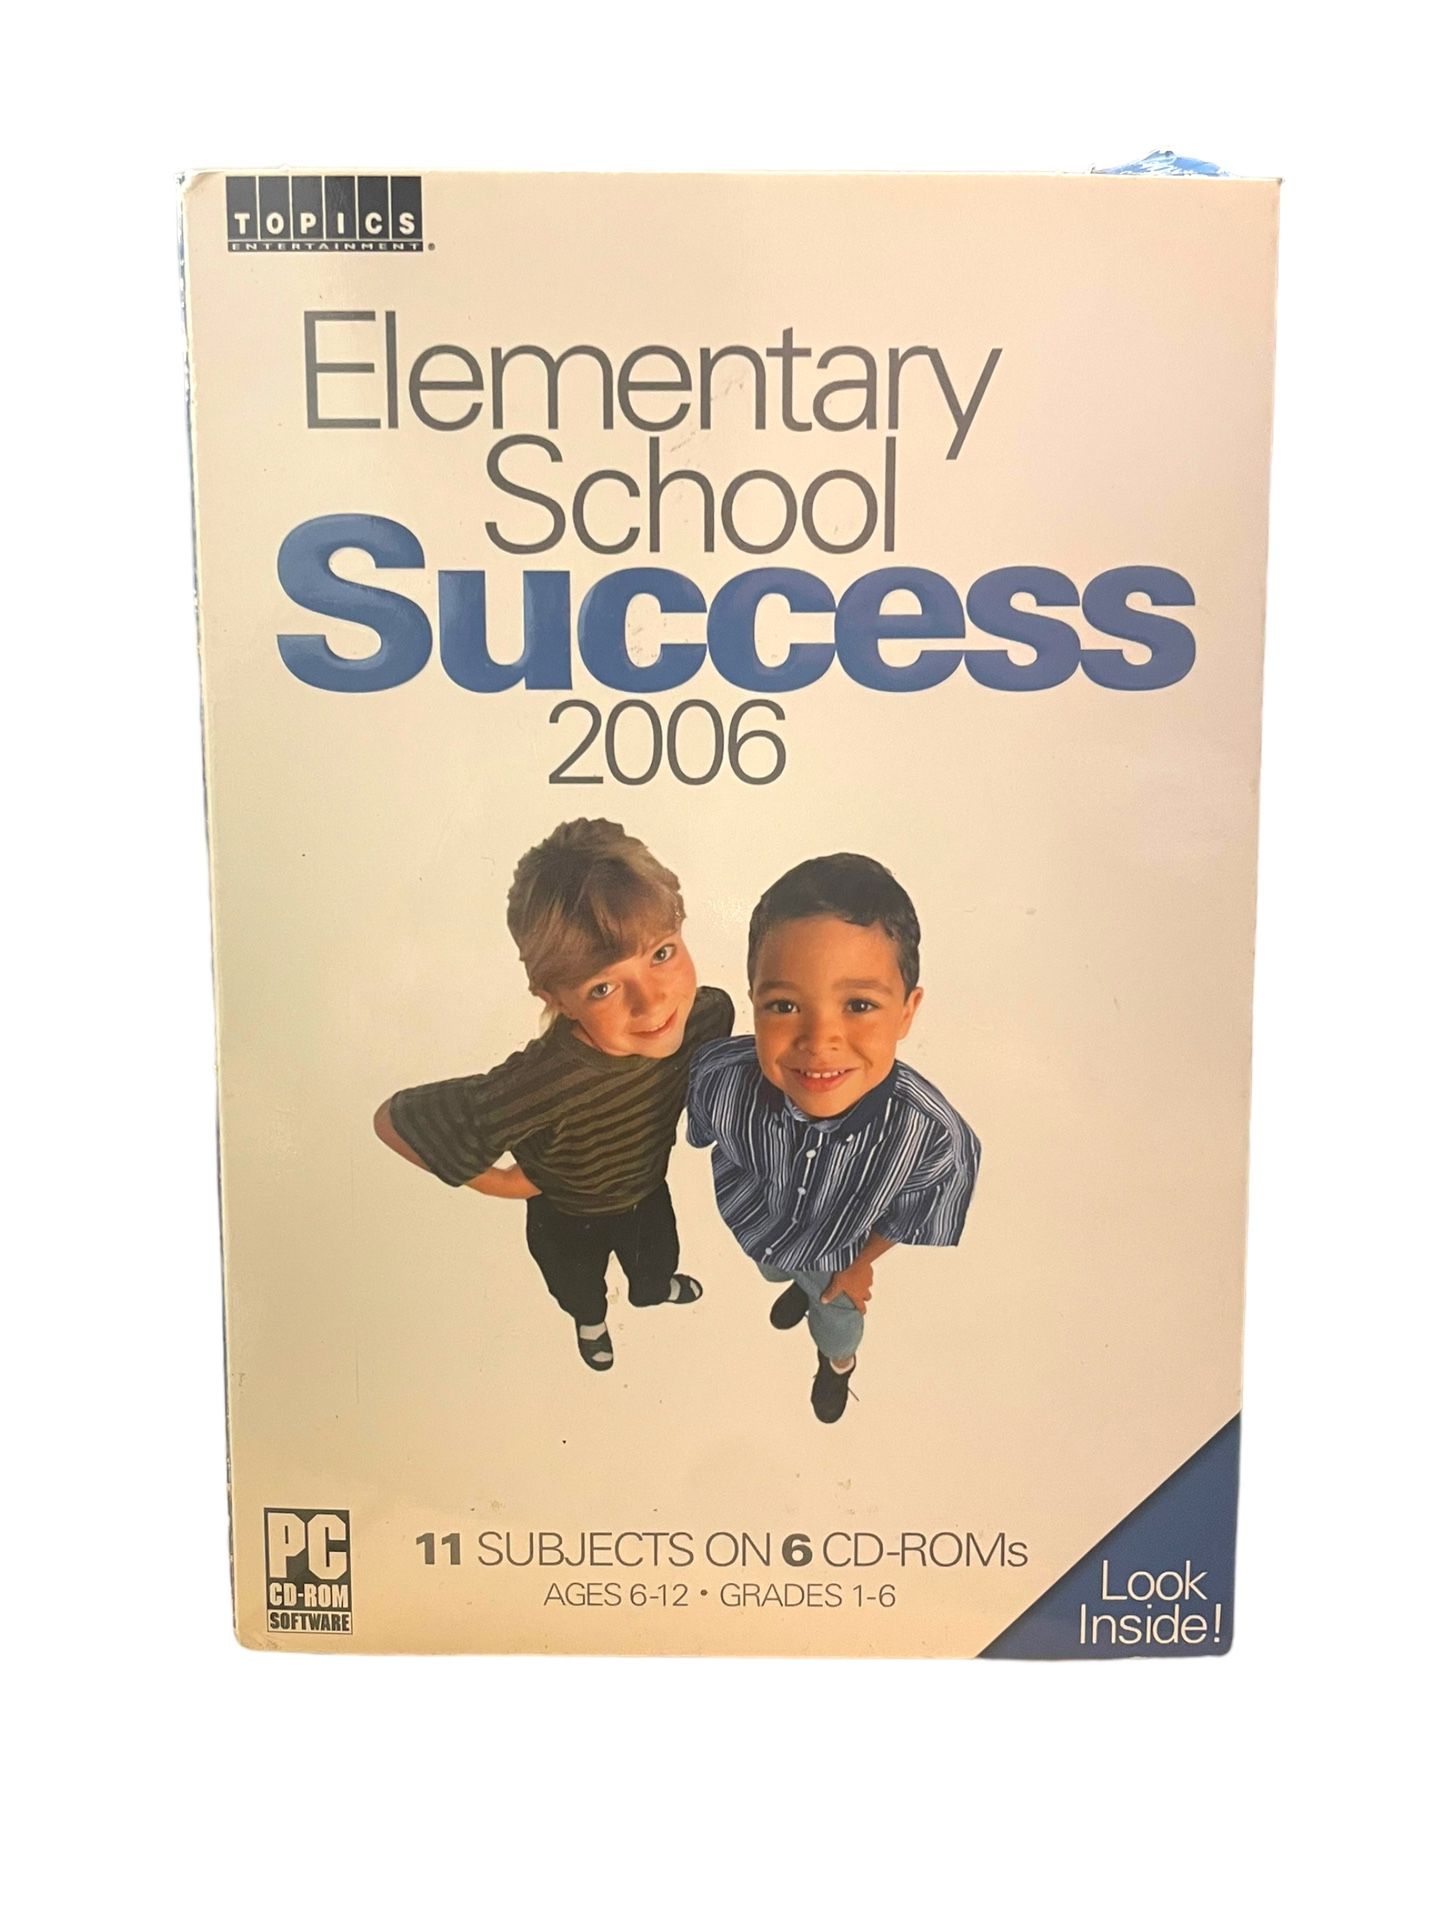 ELEMENTARY SCHOOL SUCCESS 